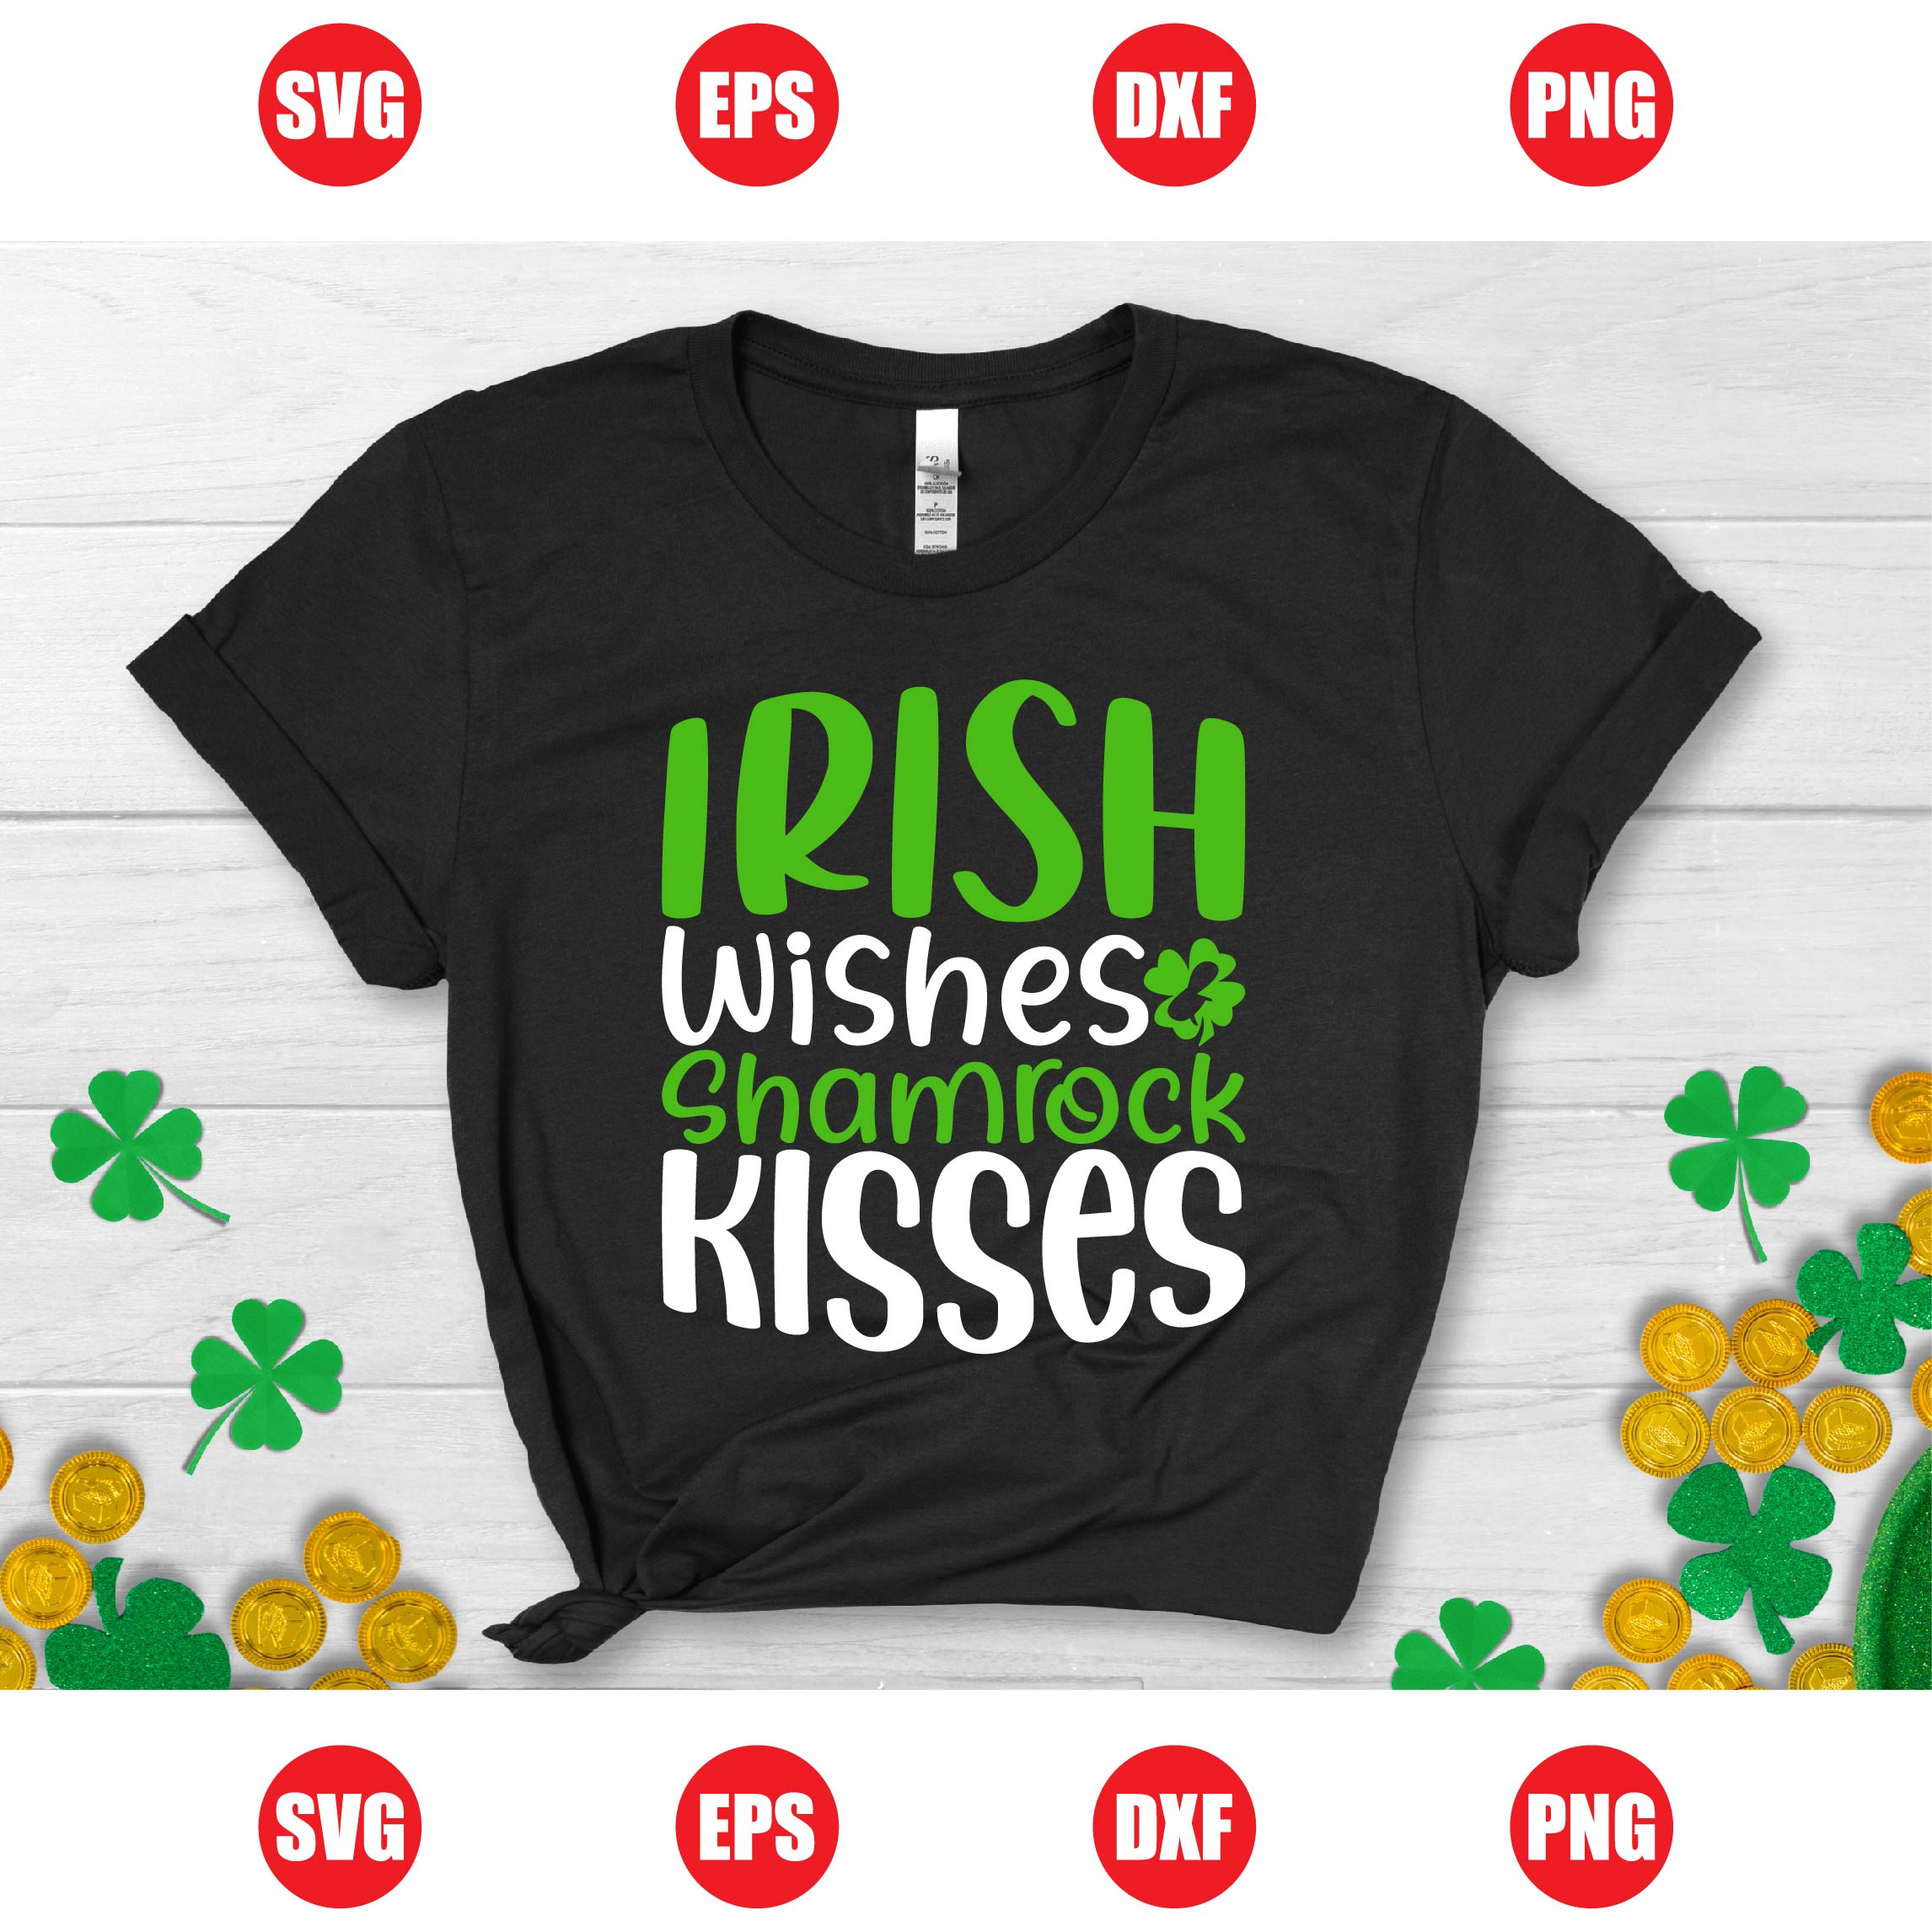 T - shirt that says irish wishes and shamrock kisses.